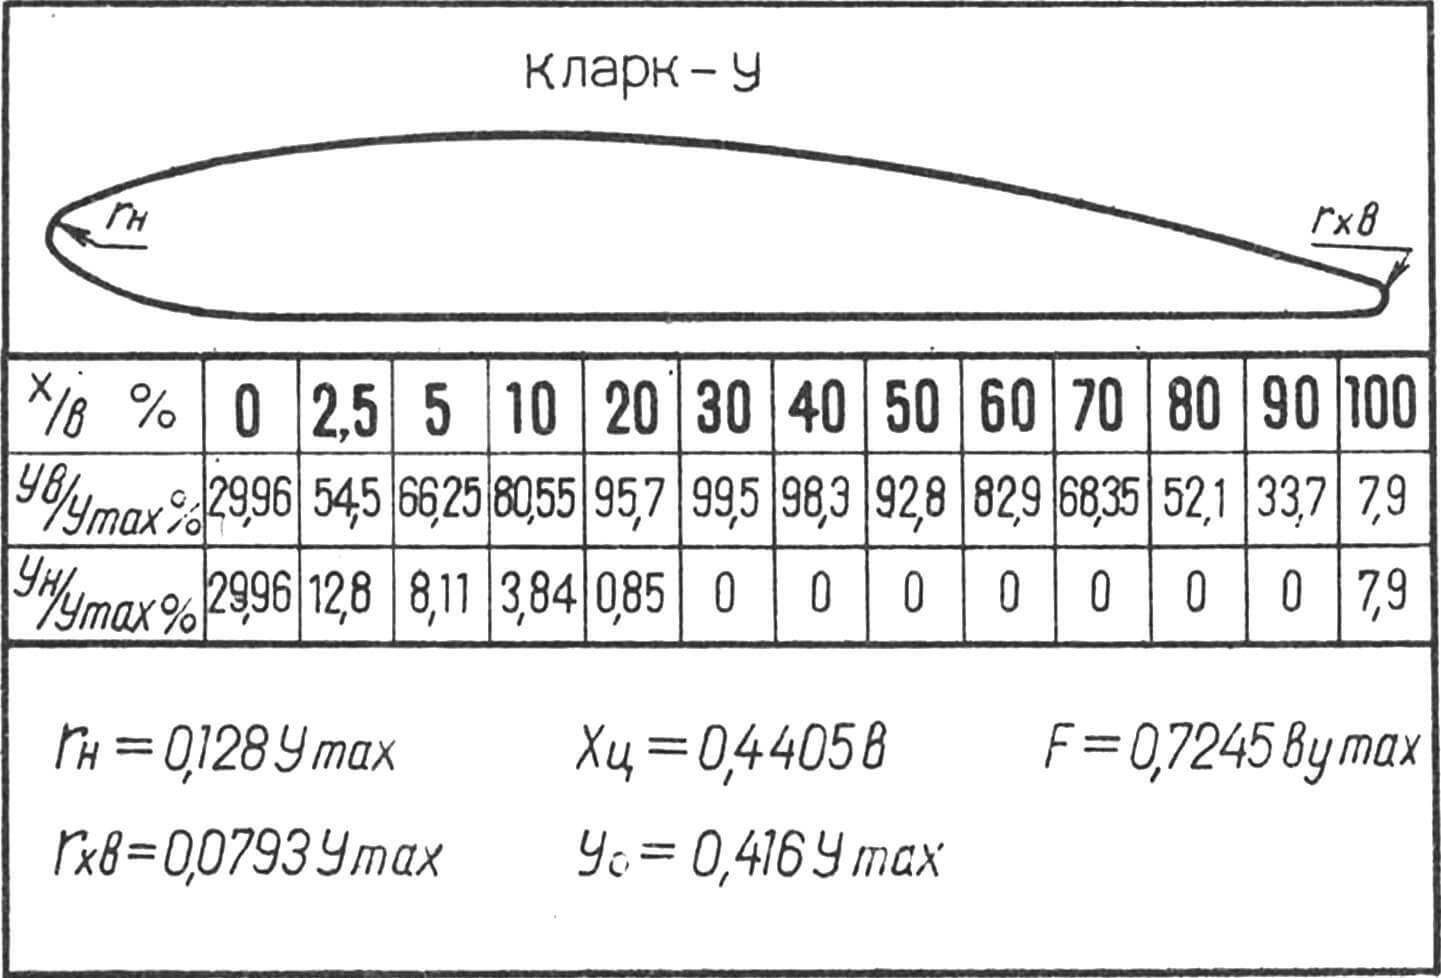 Геометрические характеристики профиля Кларк-У.